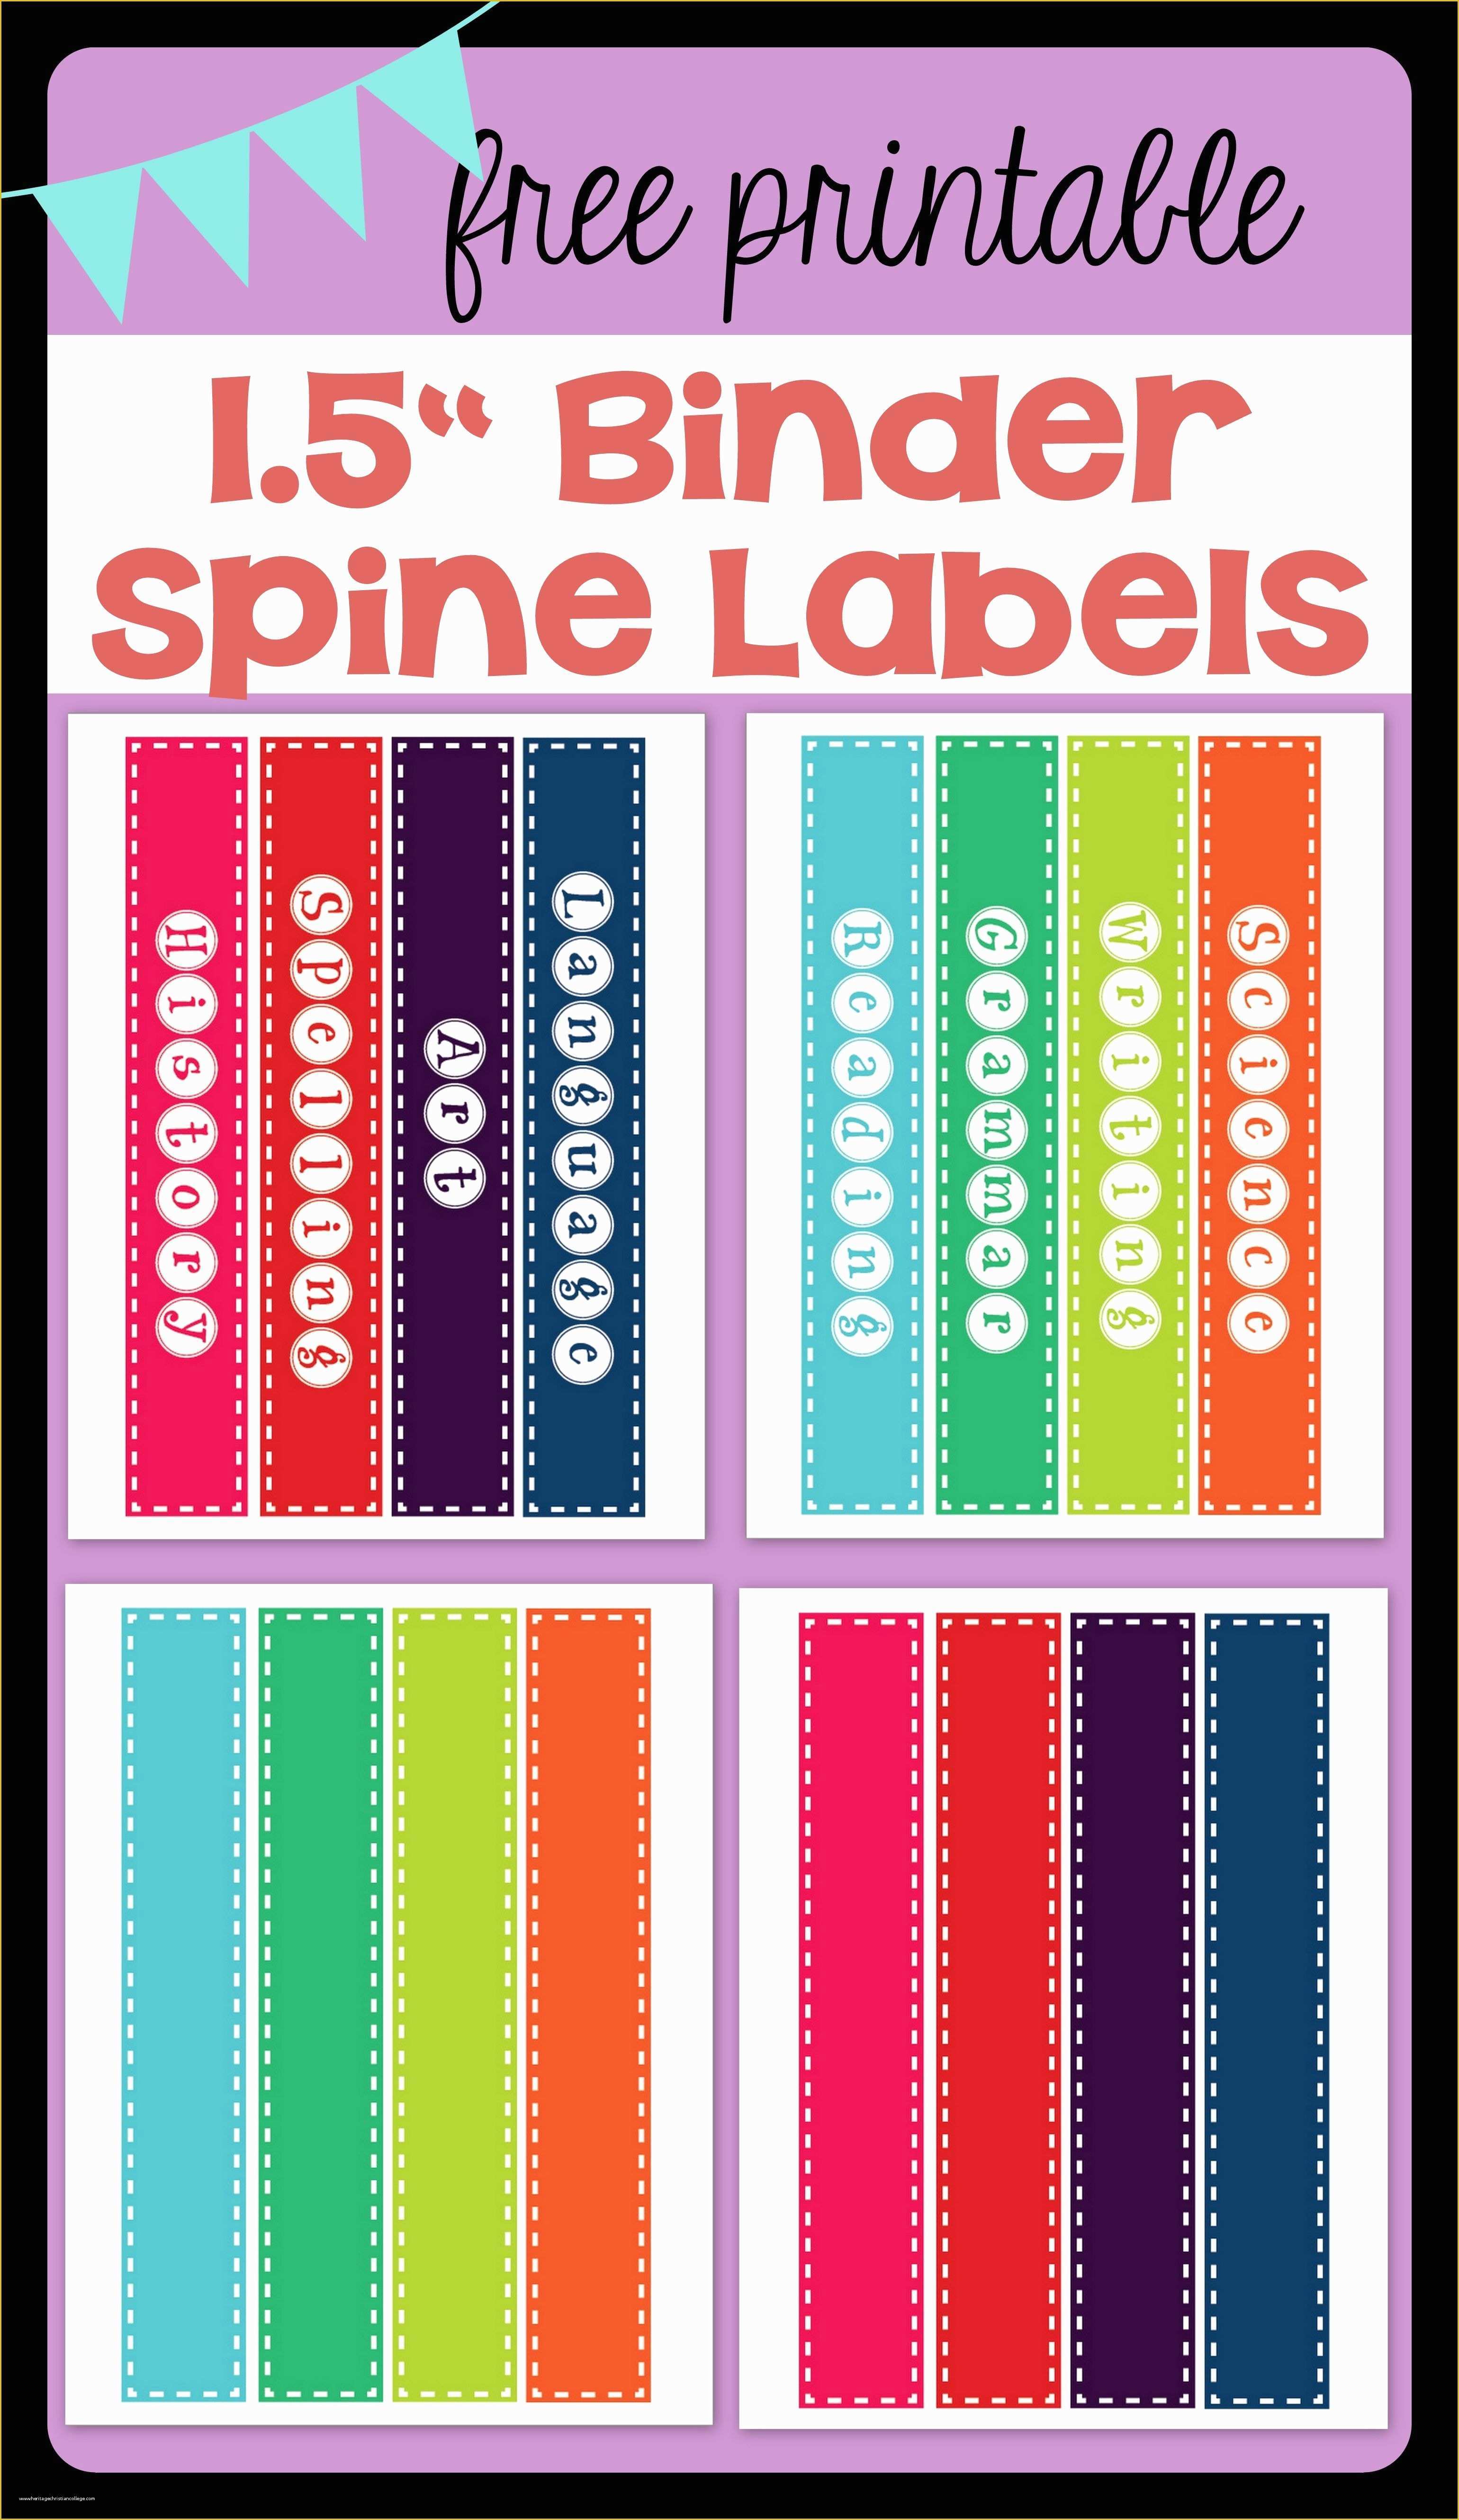 Free 1 Binder Spine Template Of Free Printable 1 5" Binder Spine Labels for Basic School